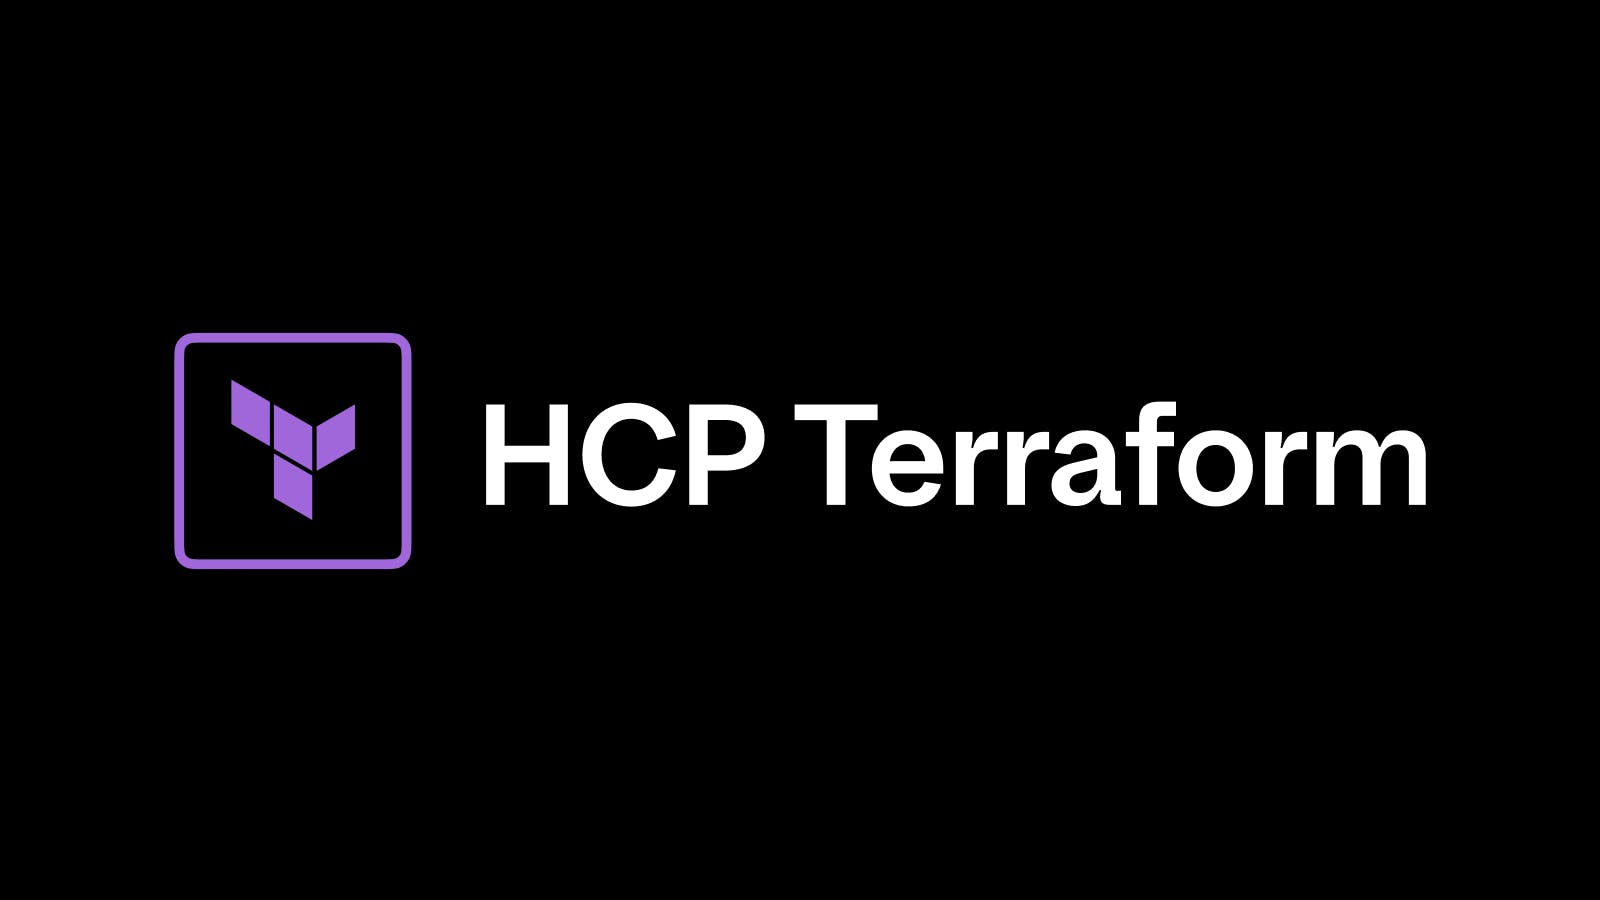 Terraform adds granular permissions to manage agent pools